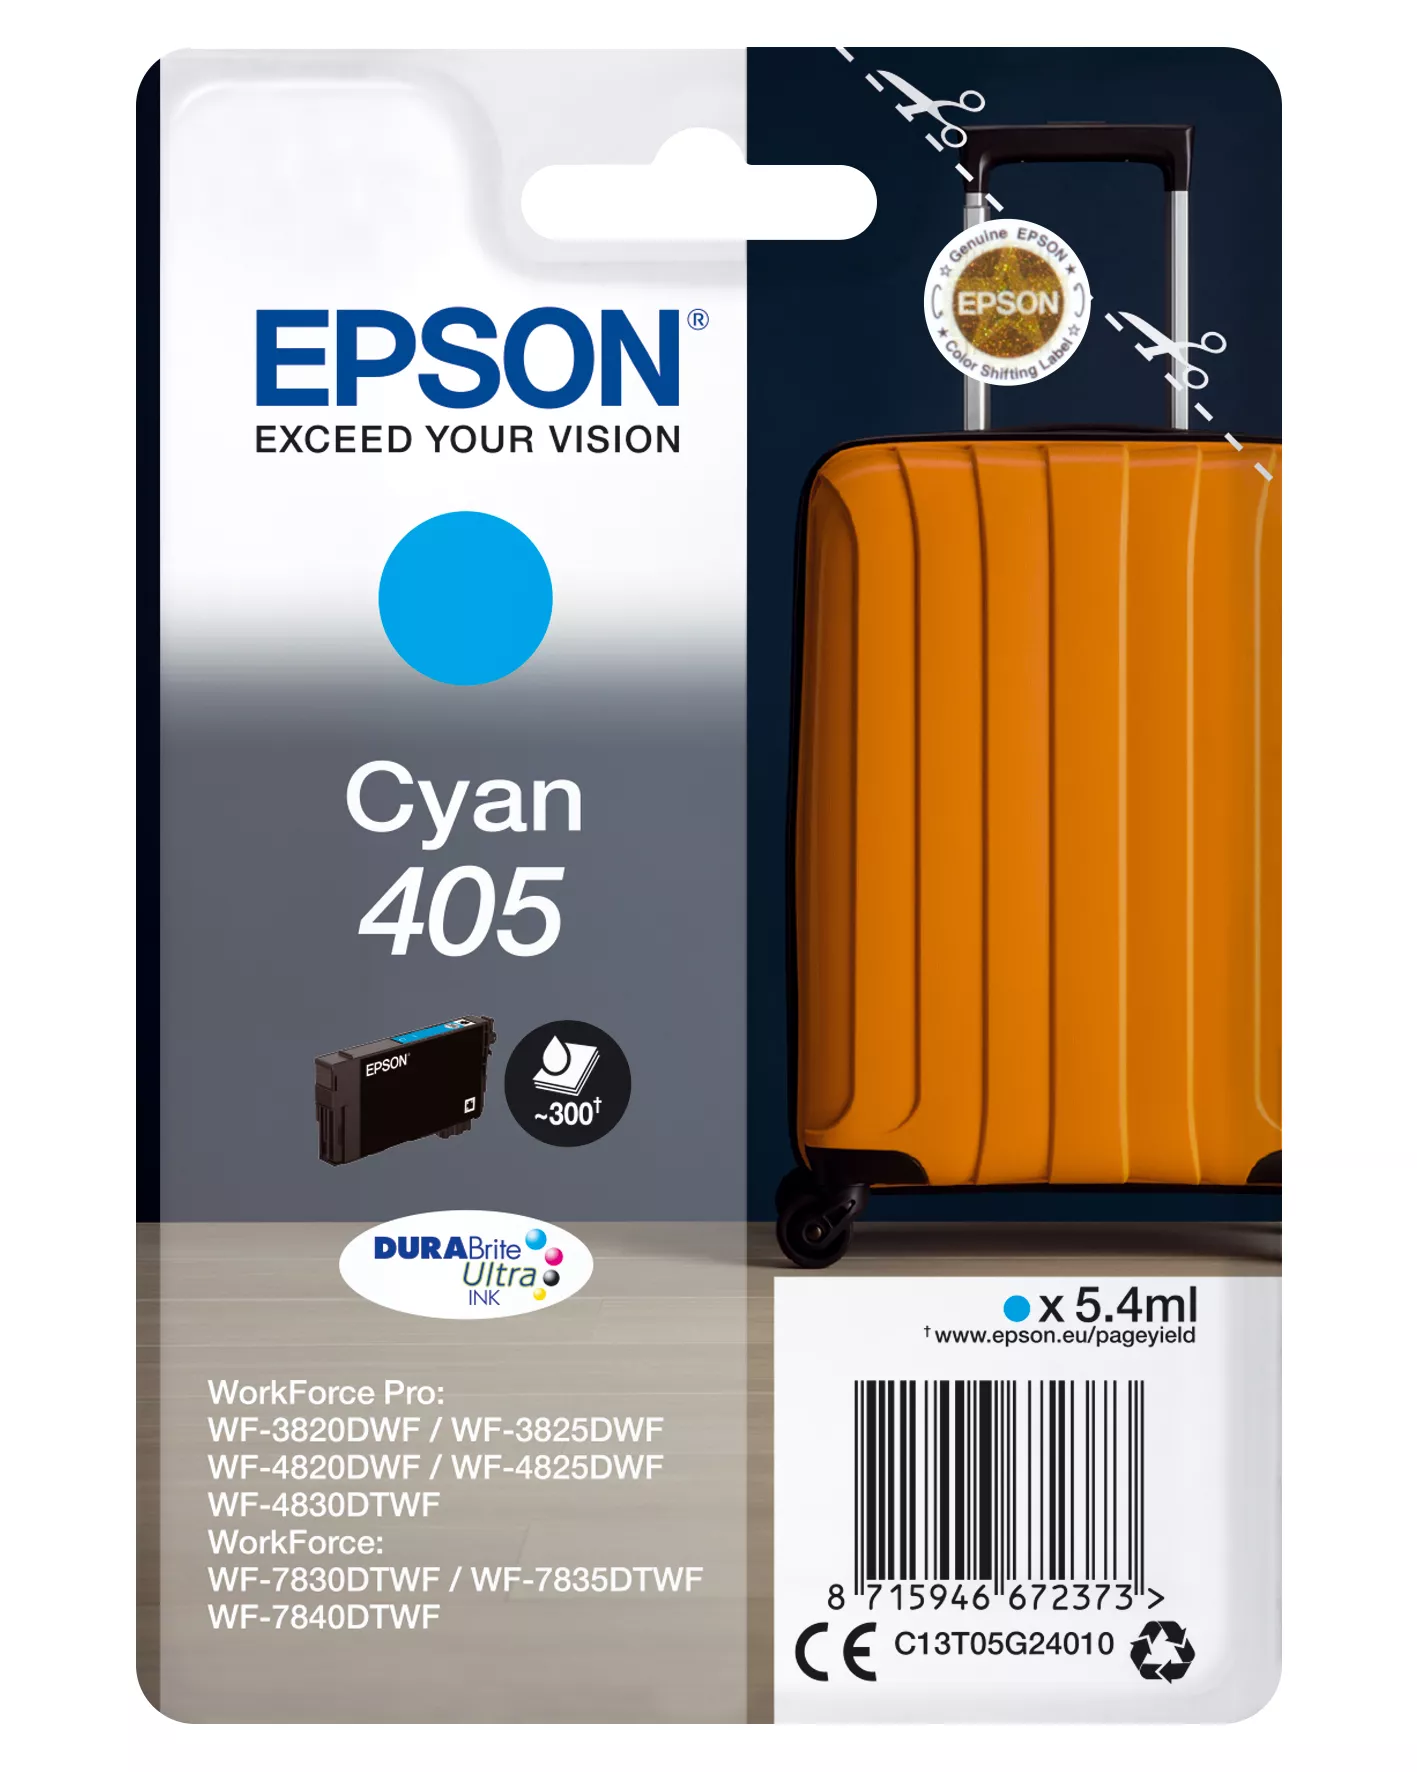 Achat EPSON Singlepack Cyan 405 DURABrite Ultra Ink - 8715946672373